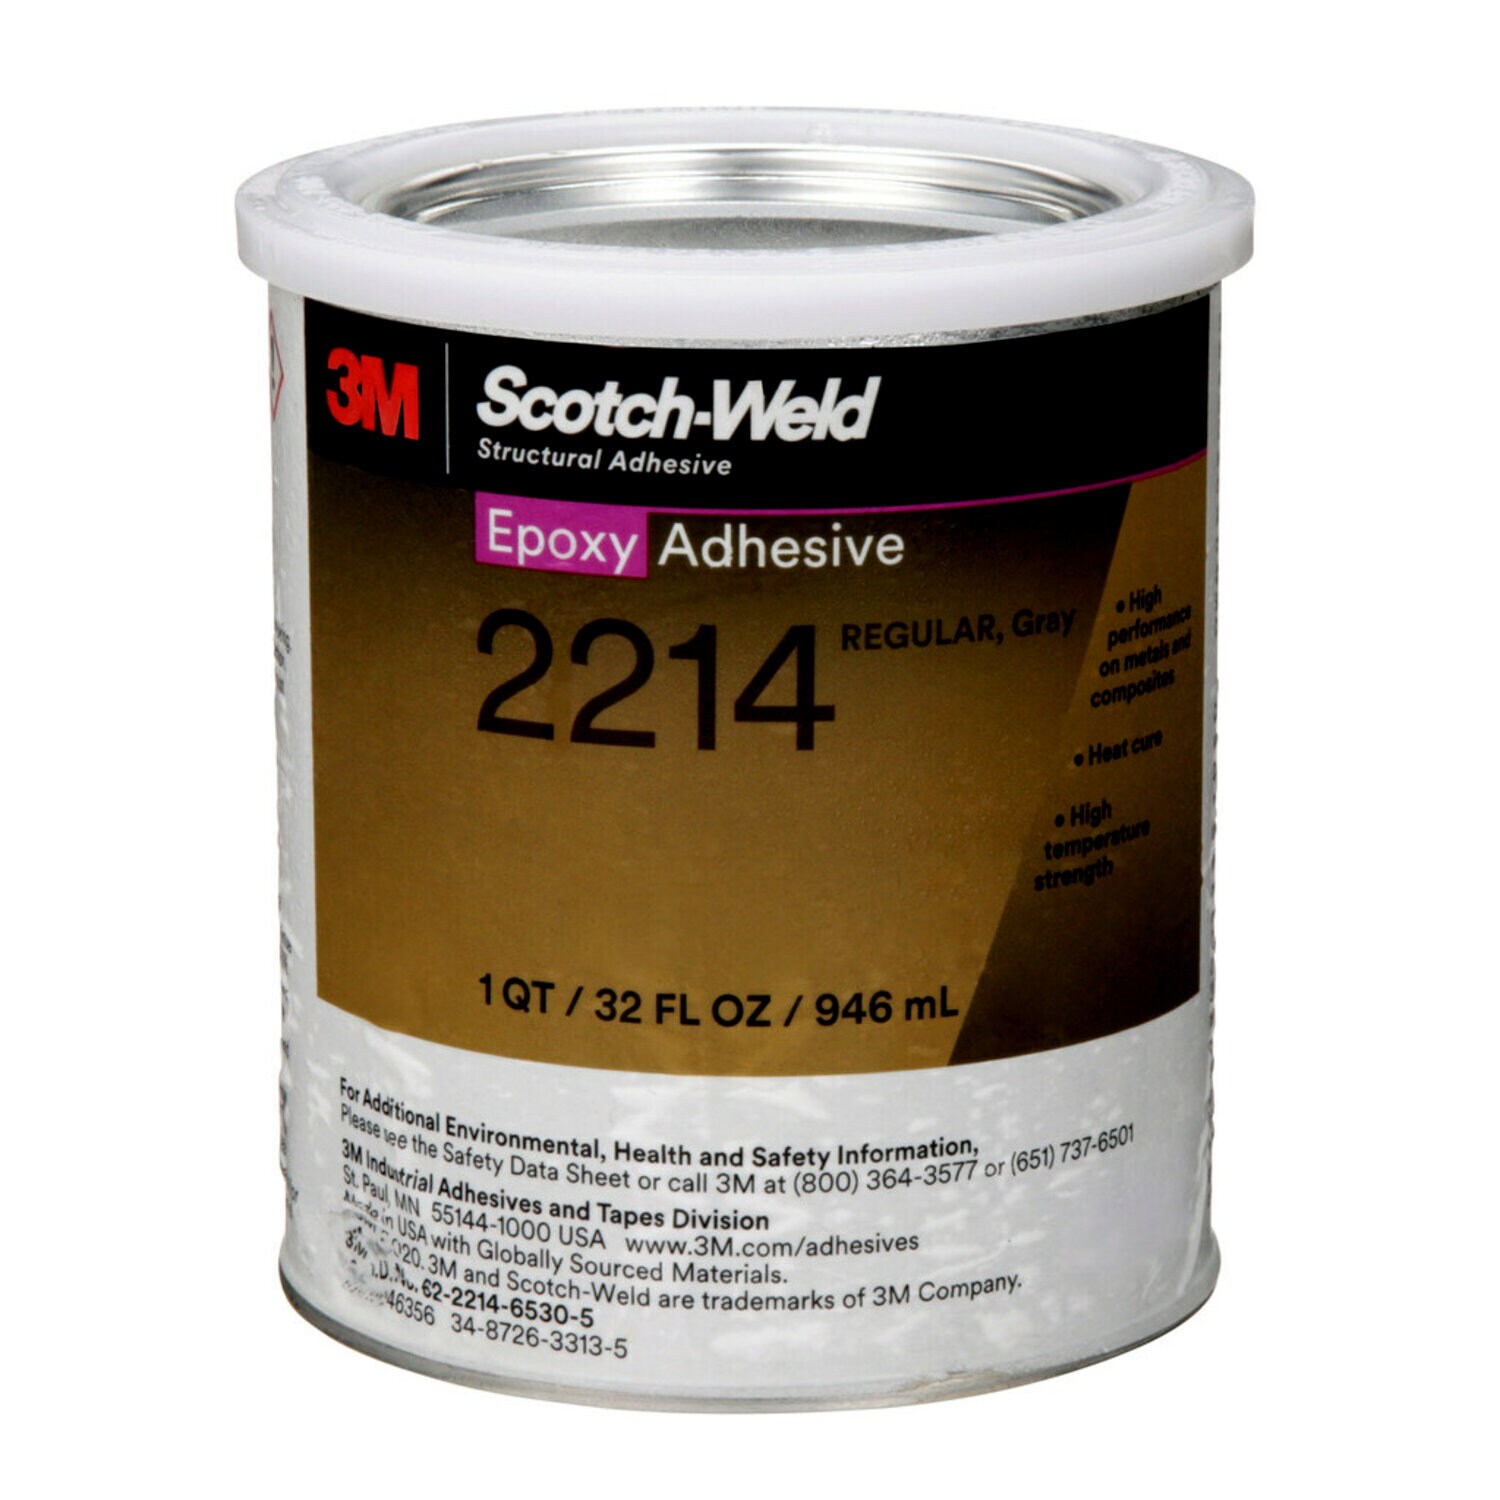 3M Scotch-Weld Epoxy Adhesive 2214, Regular, Gray, 1 Quart, 2 Can/Case, Aircraft